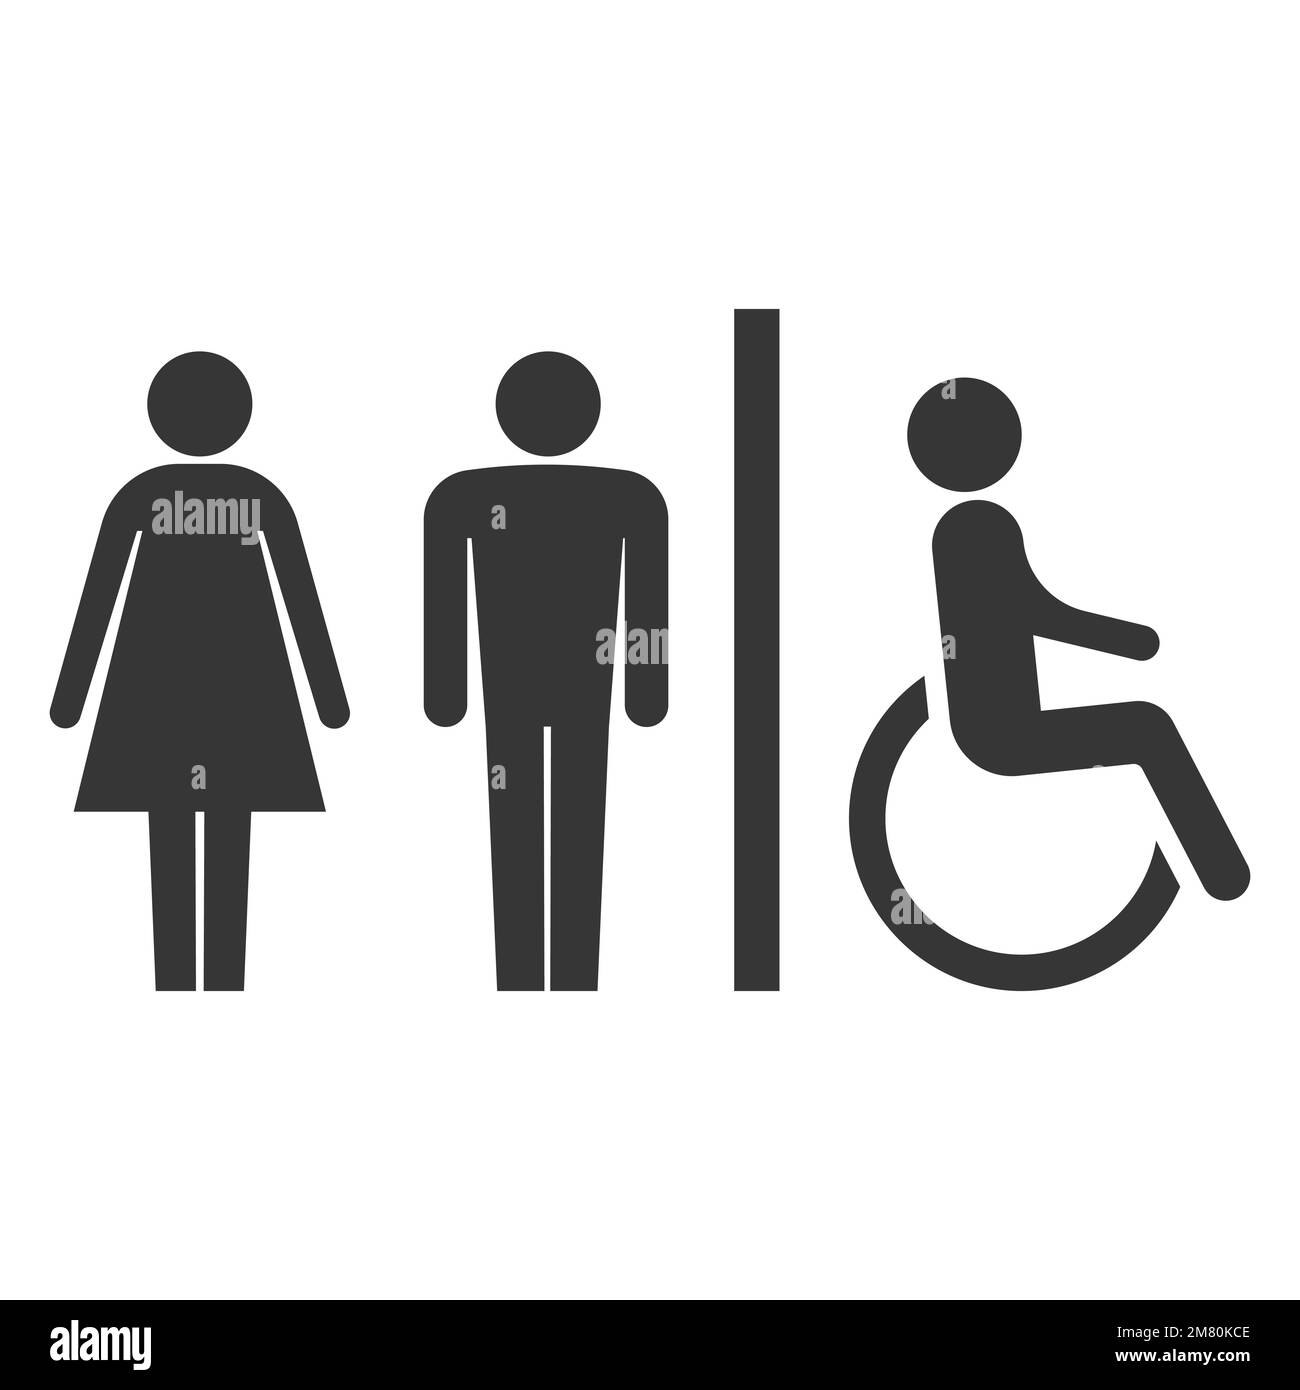 Toilet icons. Man, woman, handicap.Restroom, bathroom in a public area, navigation Vector illustration Eps 10 Stock Vector